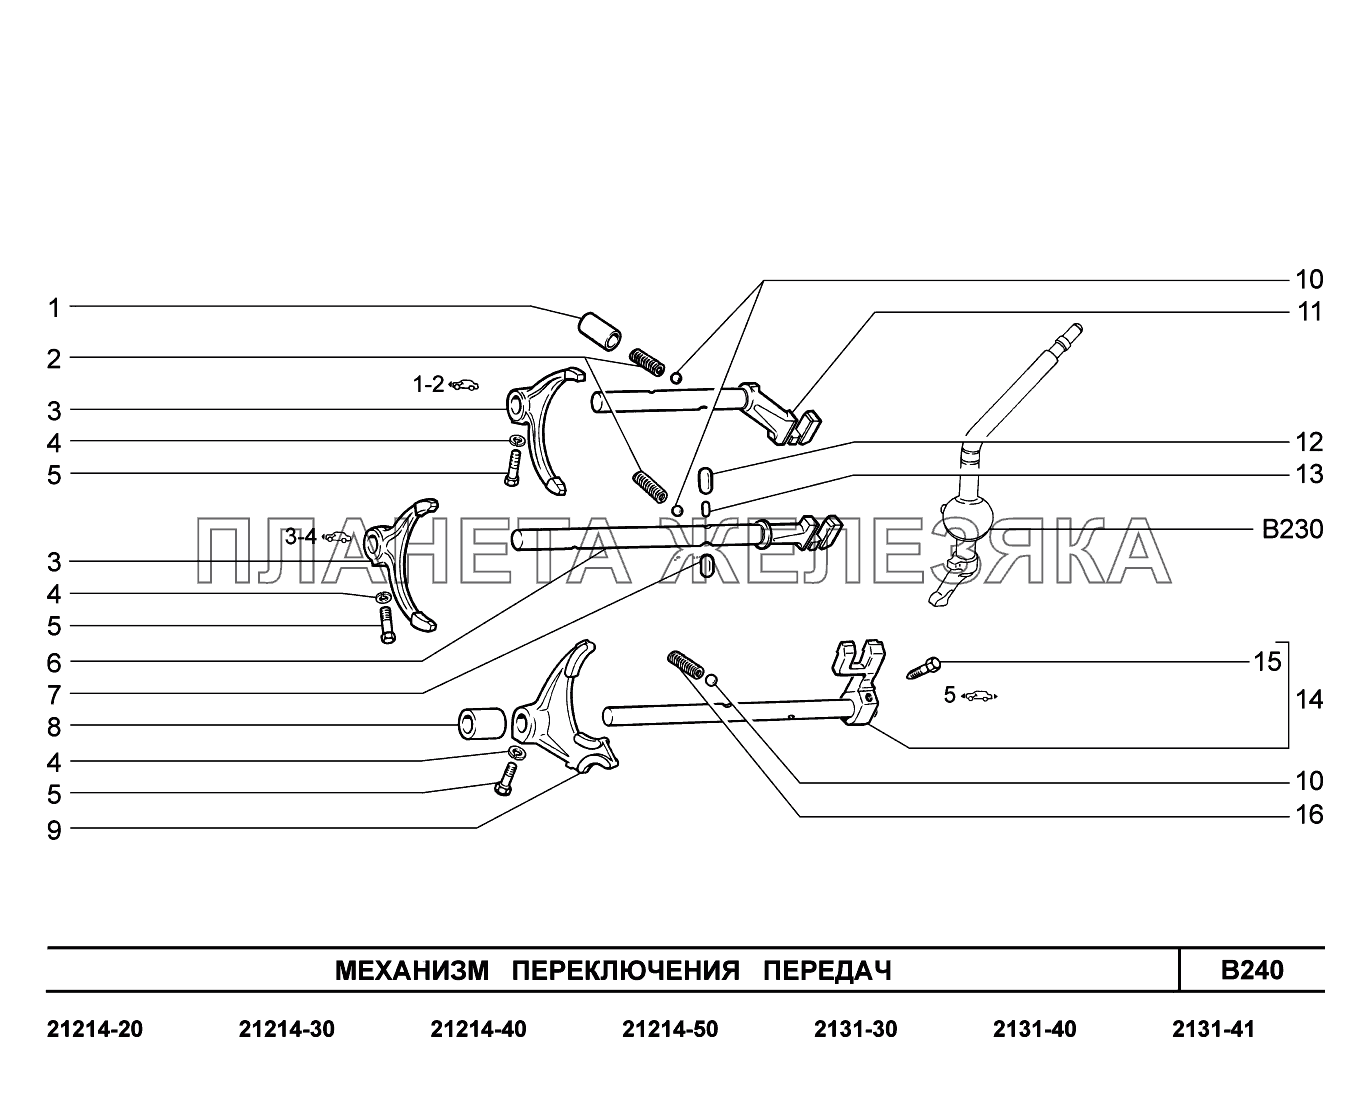 B240. Механизм переключения передач LADA 4x4